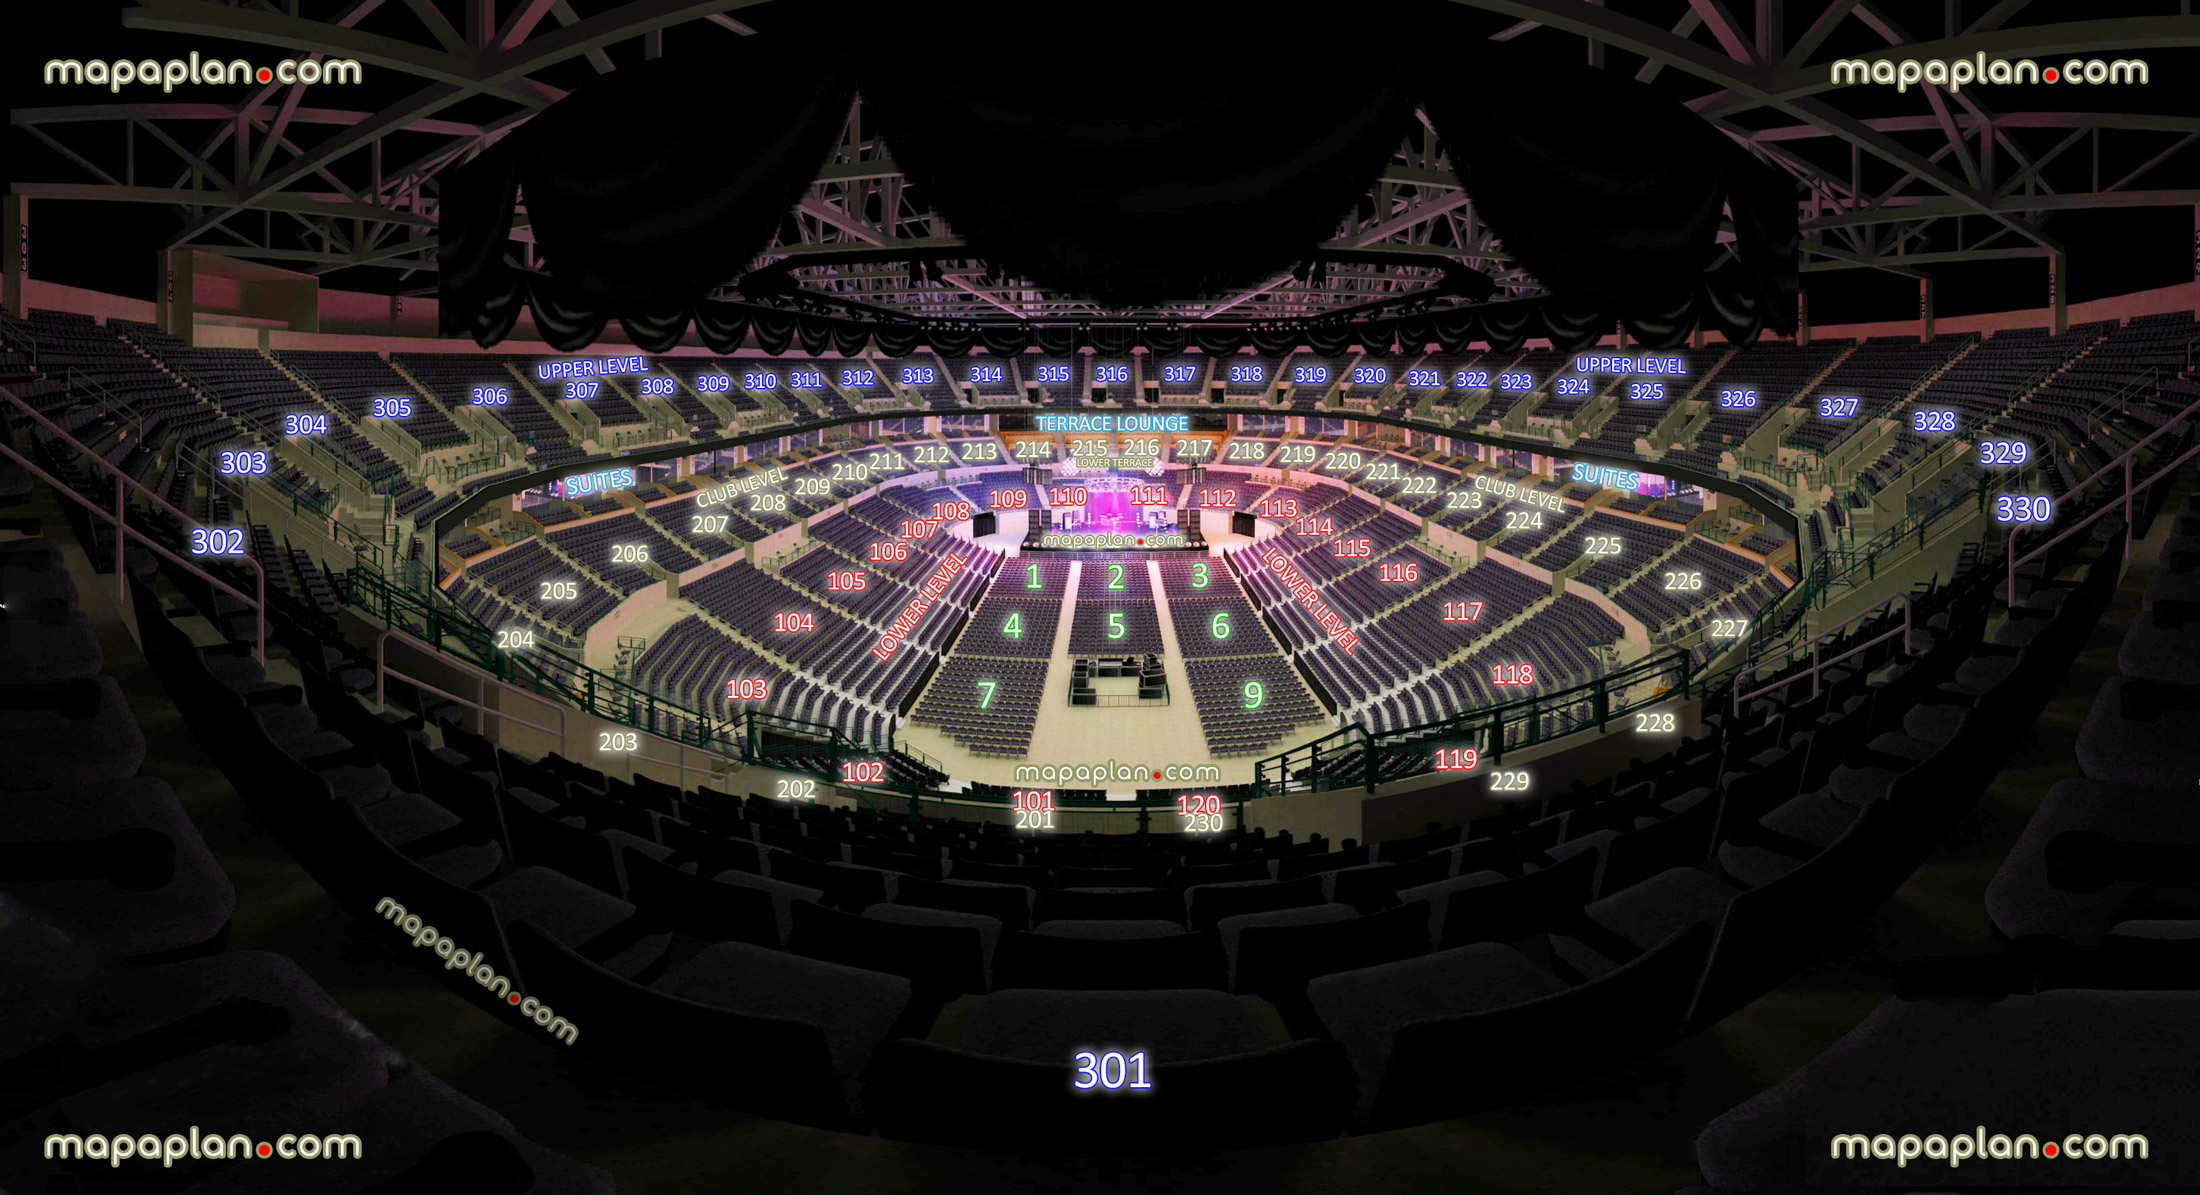 Chesapeake Arena 3d Seating Chart